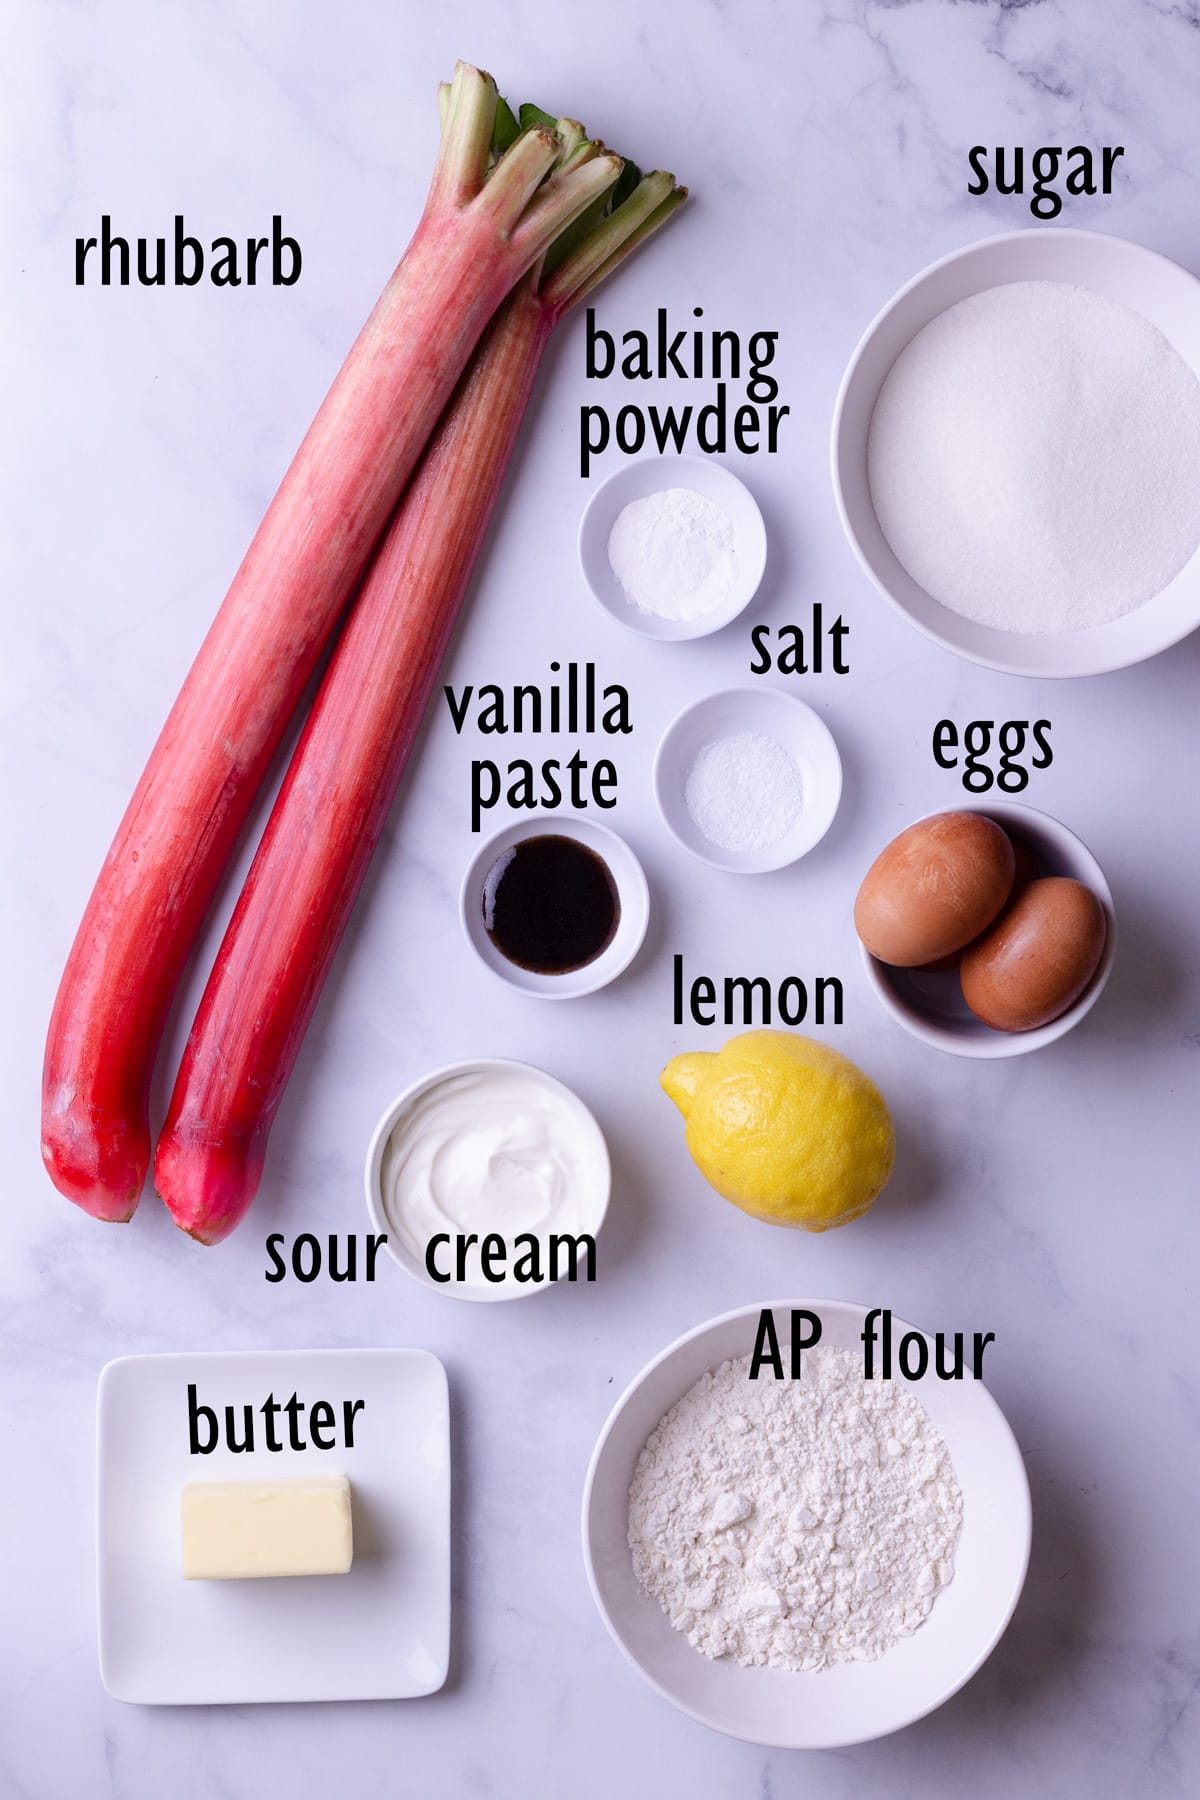 Ingredients including rhubarb, flour, sugar, eggs, baking powder, salt, lemon, butter, sour cream and vanilla.